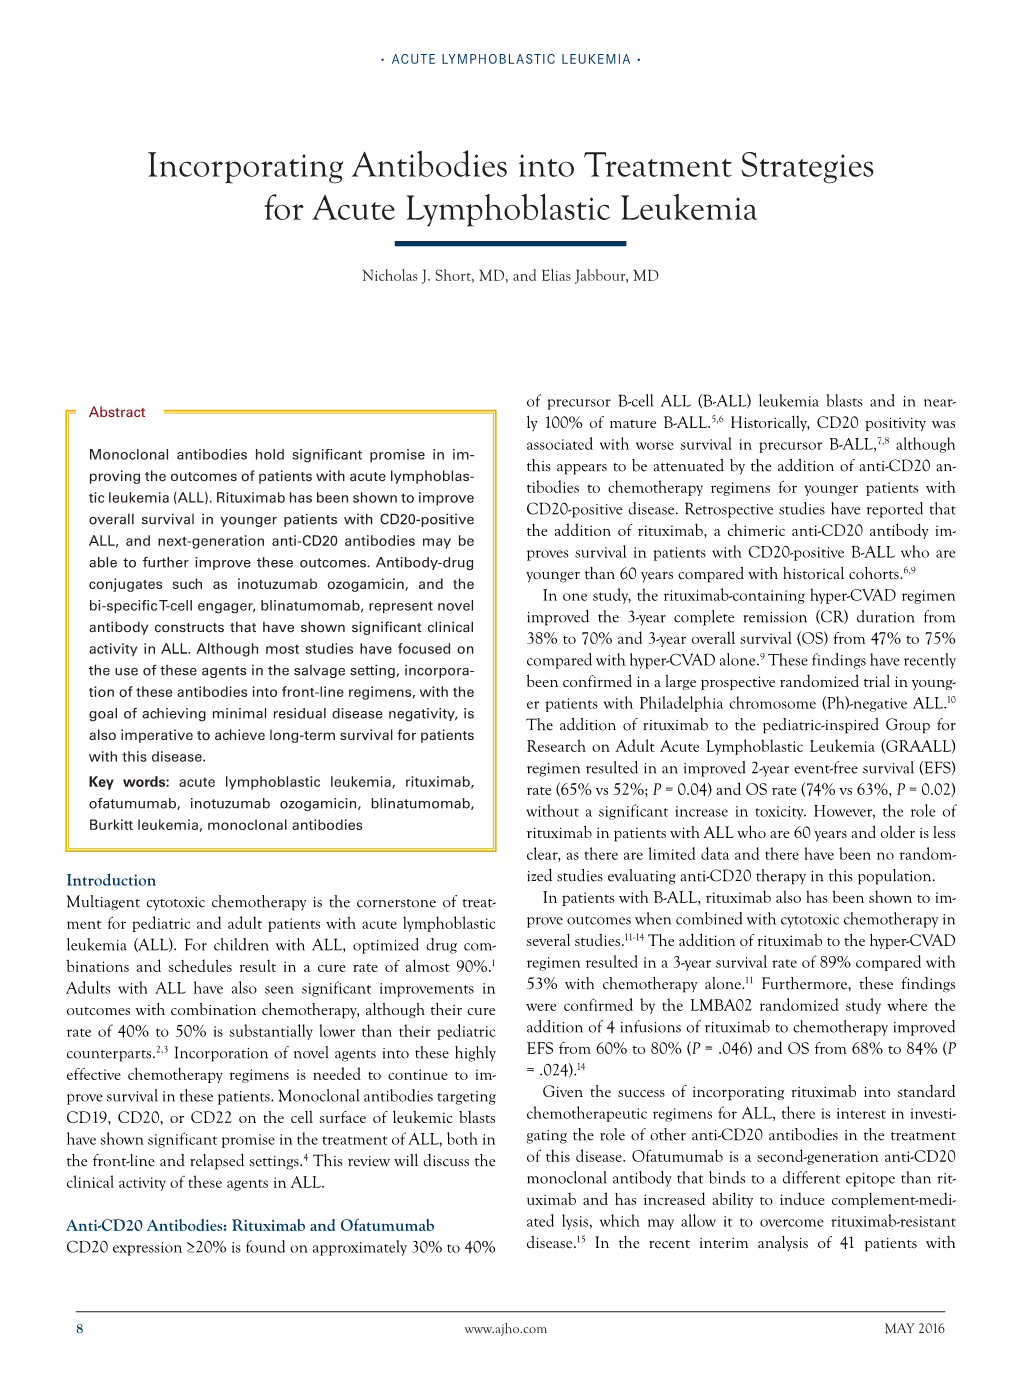 Incorporating Antibodies Into Treatment Strategies for Acute Lymphoblastic Leukemia